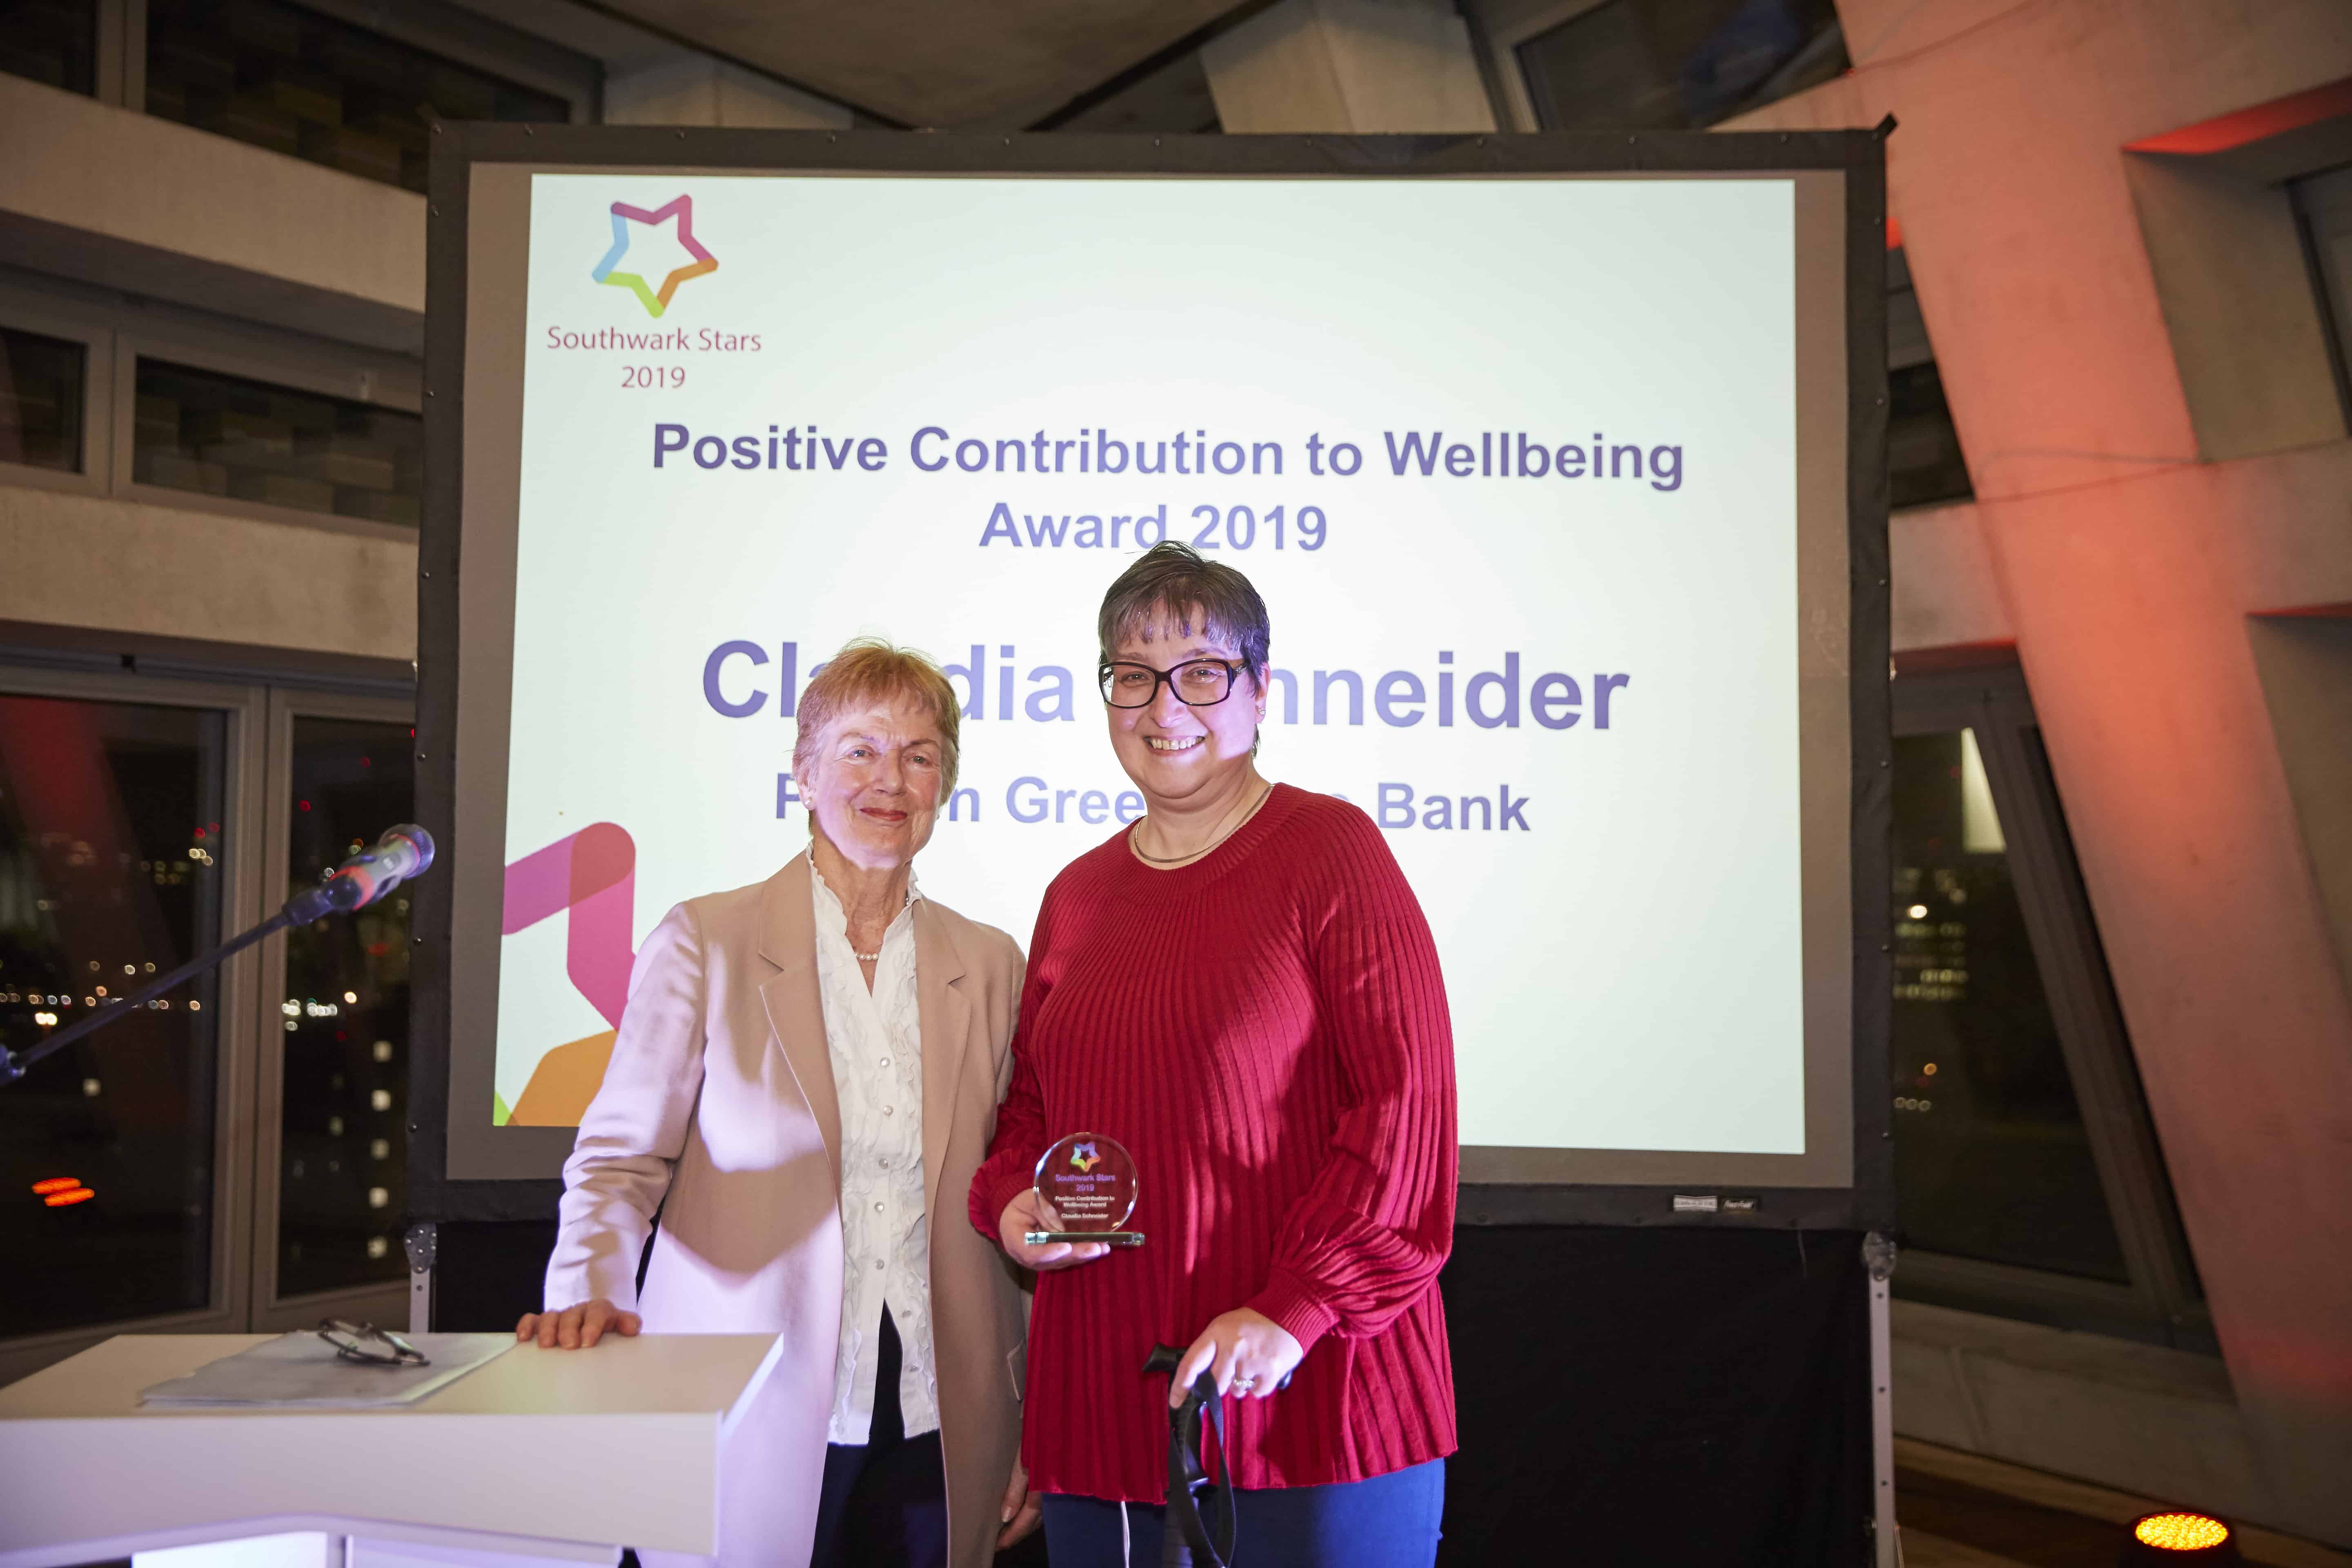 Claudia Schneider, Positive Contribution to Wellbeing Award winner